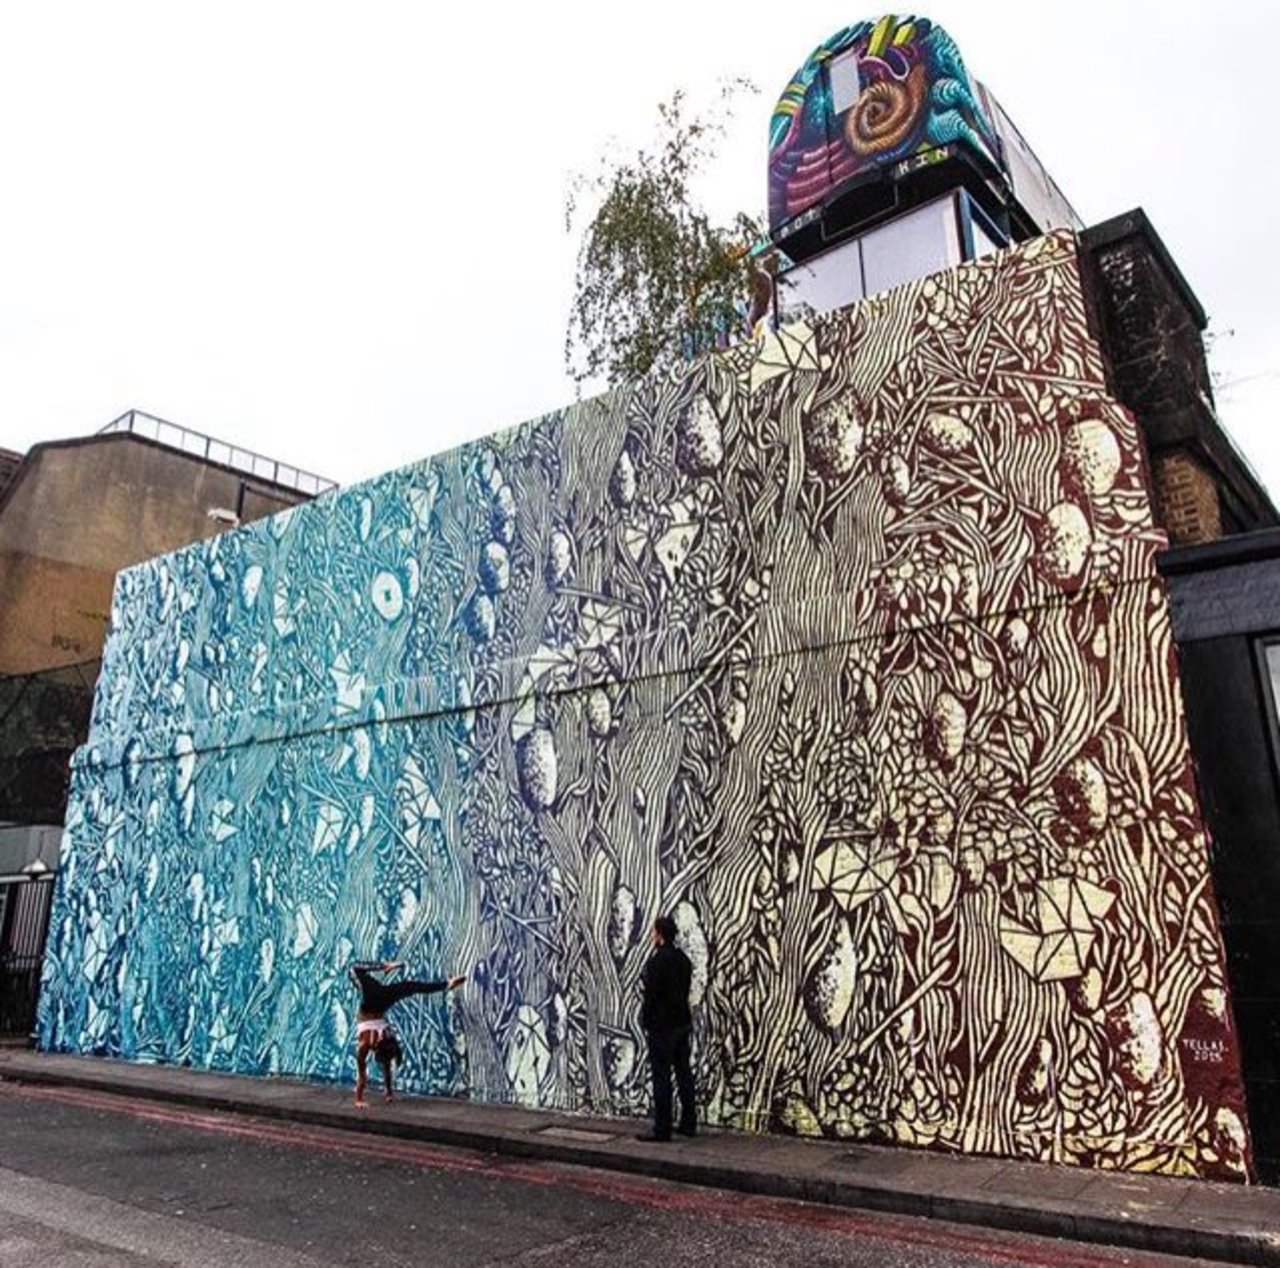 New Street Art by Tellas in Shoreditch London 

#art #graffiti #mural #streetart https://t.co/xWEctQis8c